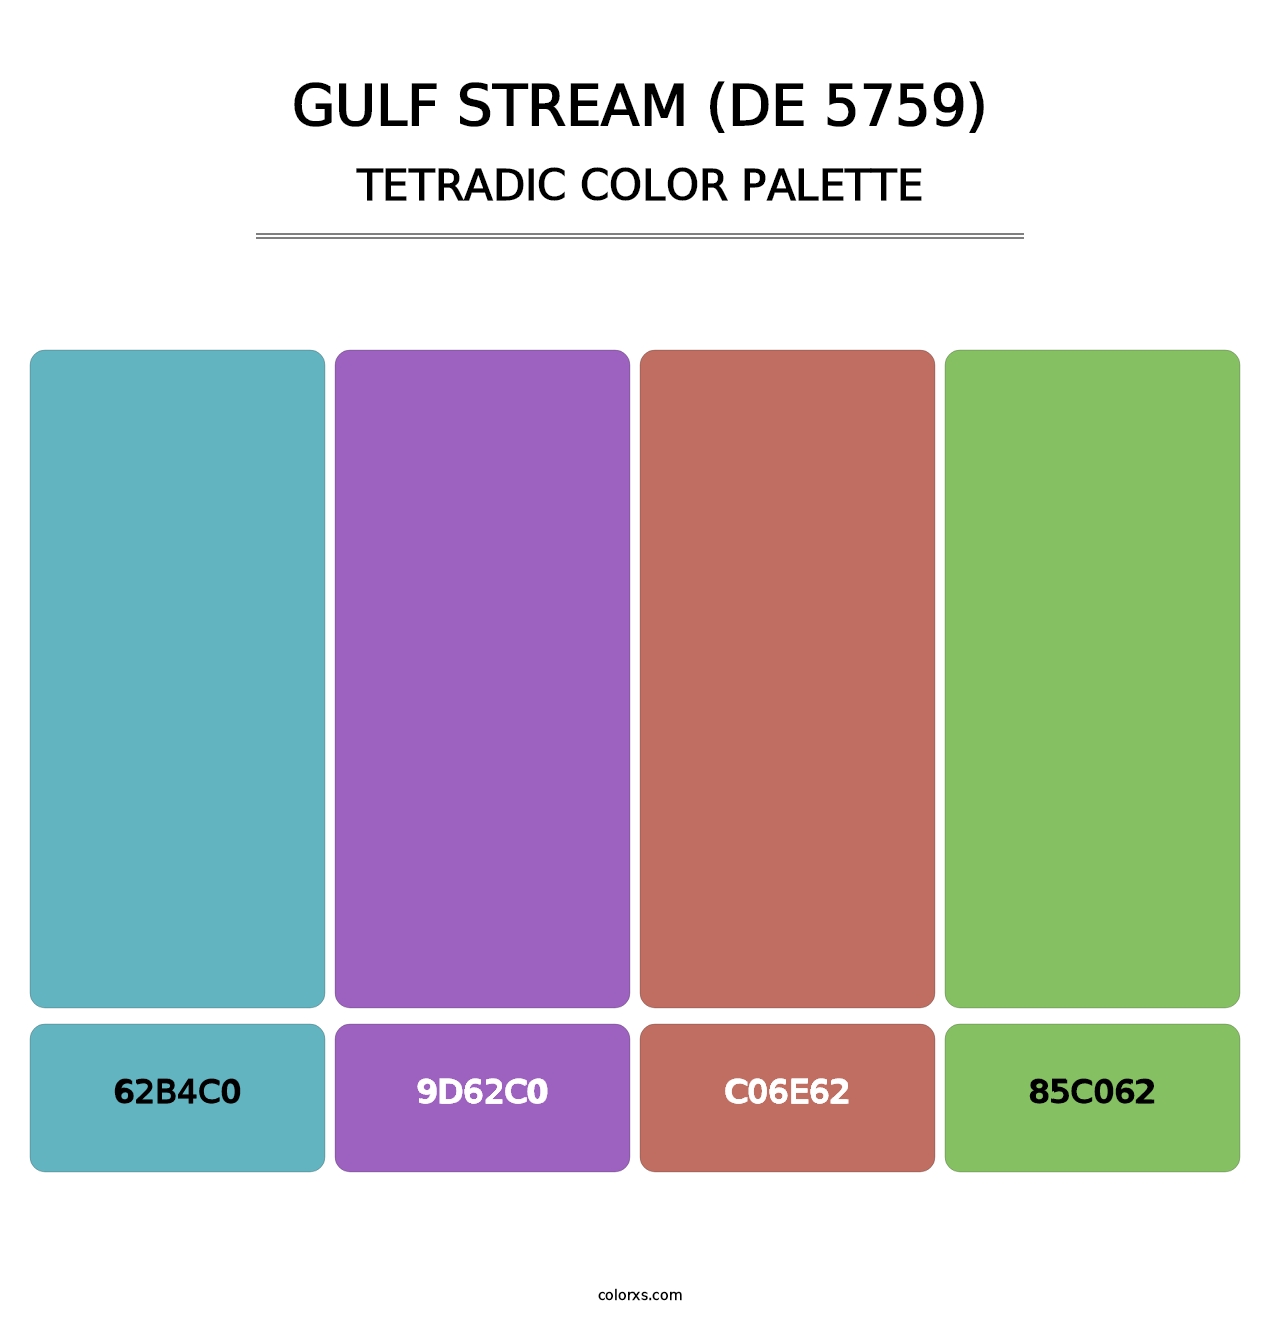 Gulf Stream (DE 5759) - Tetradic Color Palette